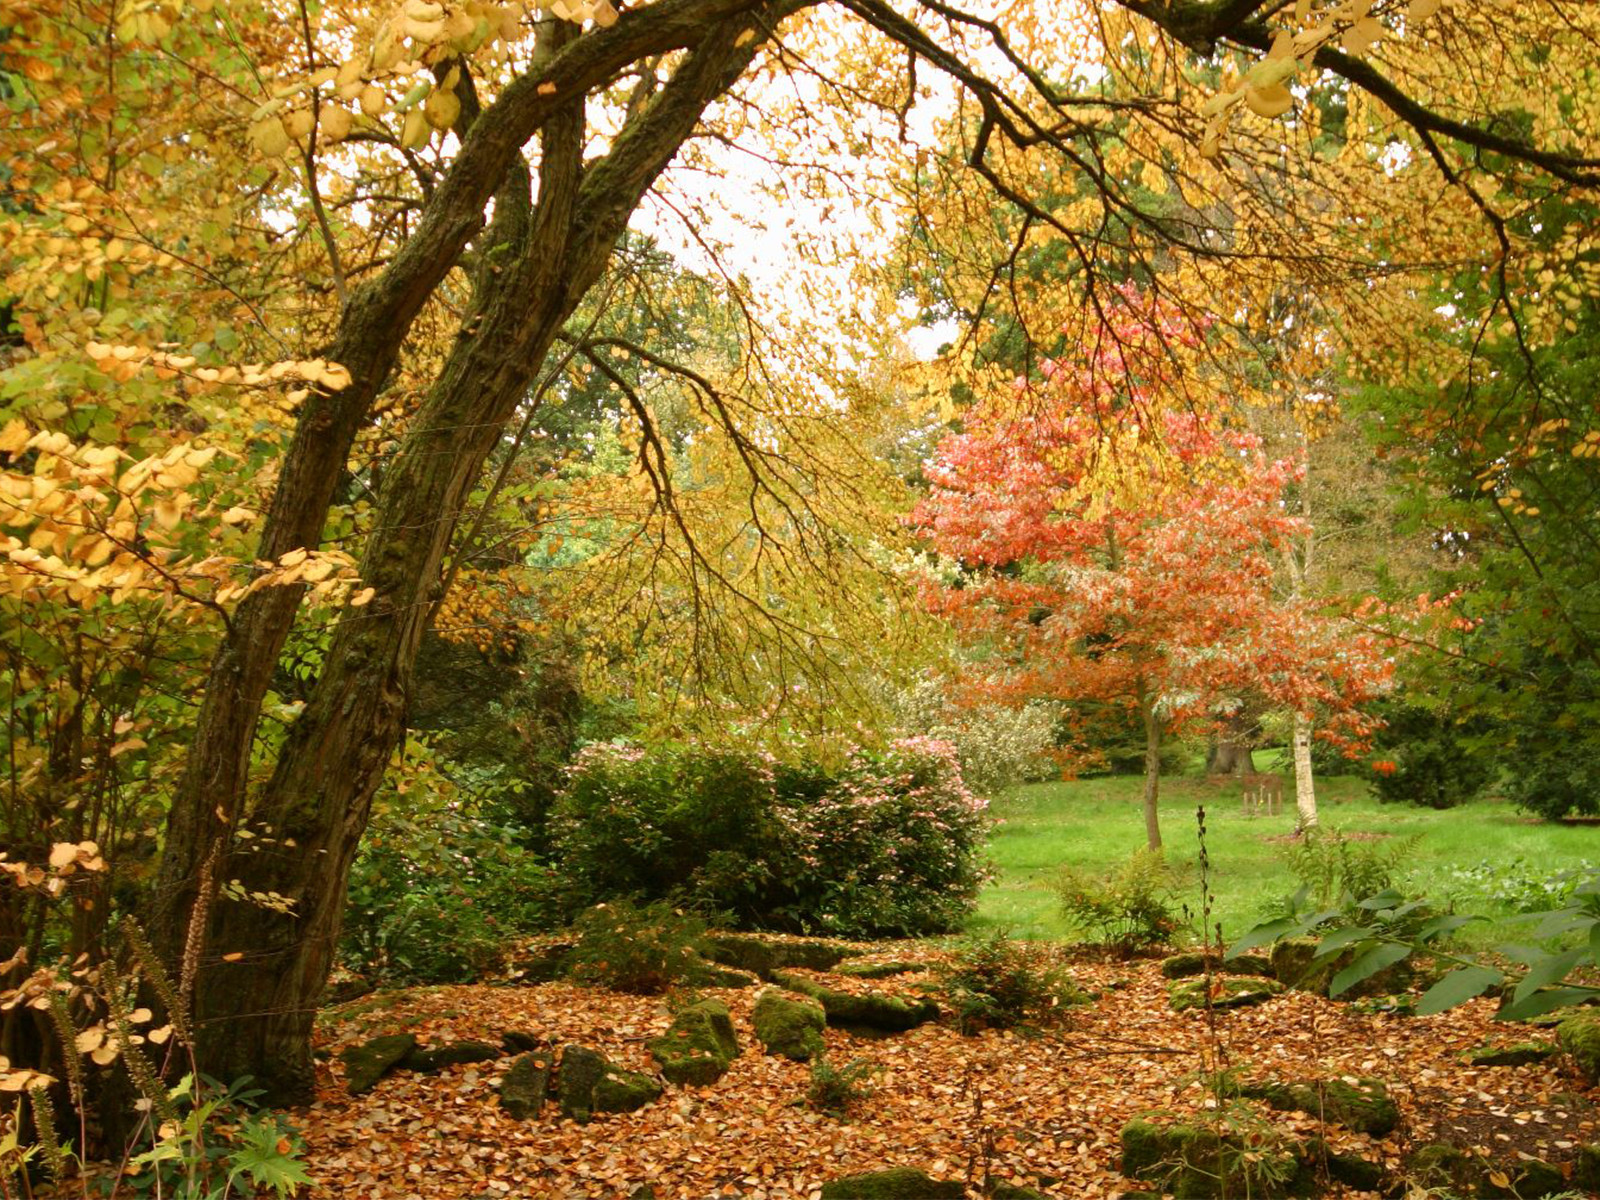 Batsford Arboretum isn't far from Evenlode Grounds Farm